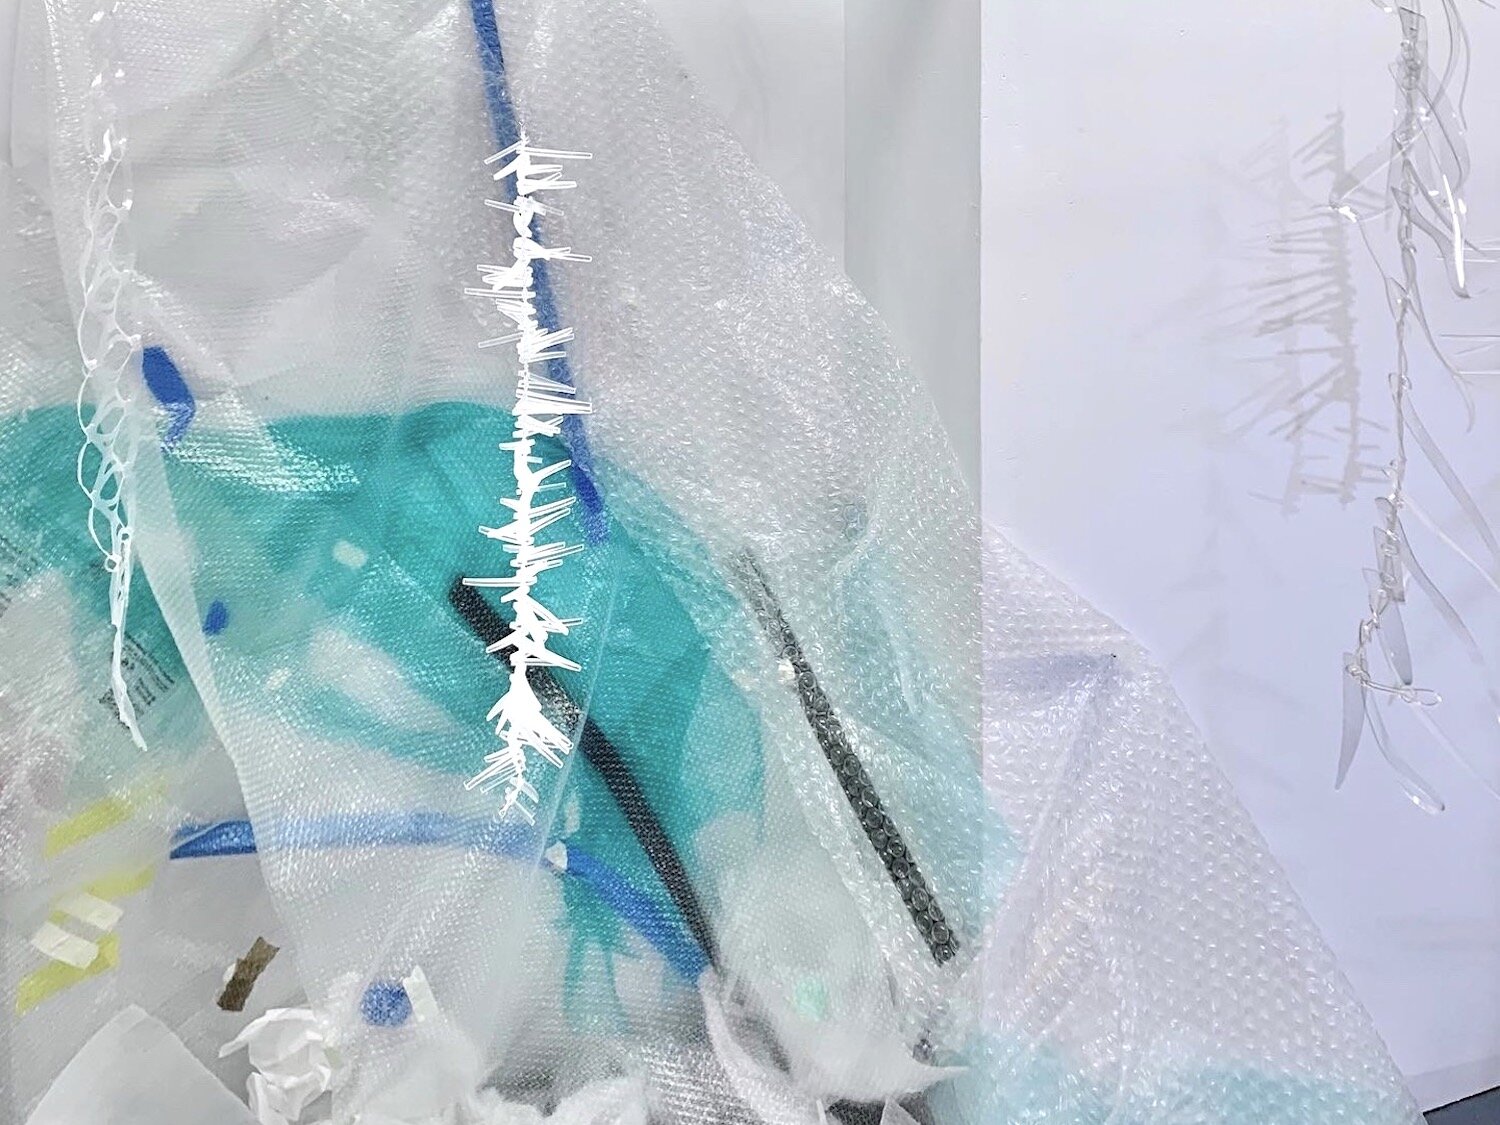  Olga Feshina: Ice Balance, 2020, installation - mix media  Ice, 2020 - polyethylene, polyvinyl, foam plastic, 100 x 60 in / 254 x 152 cm  Icicles, 2020 - plexiglass, silicone, silver, stone, 20 ~ 25 in   